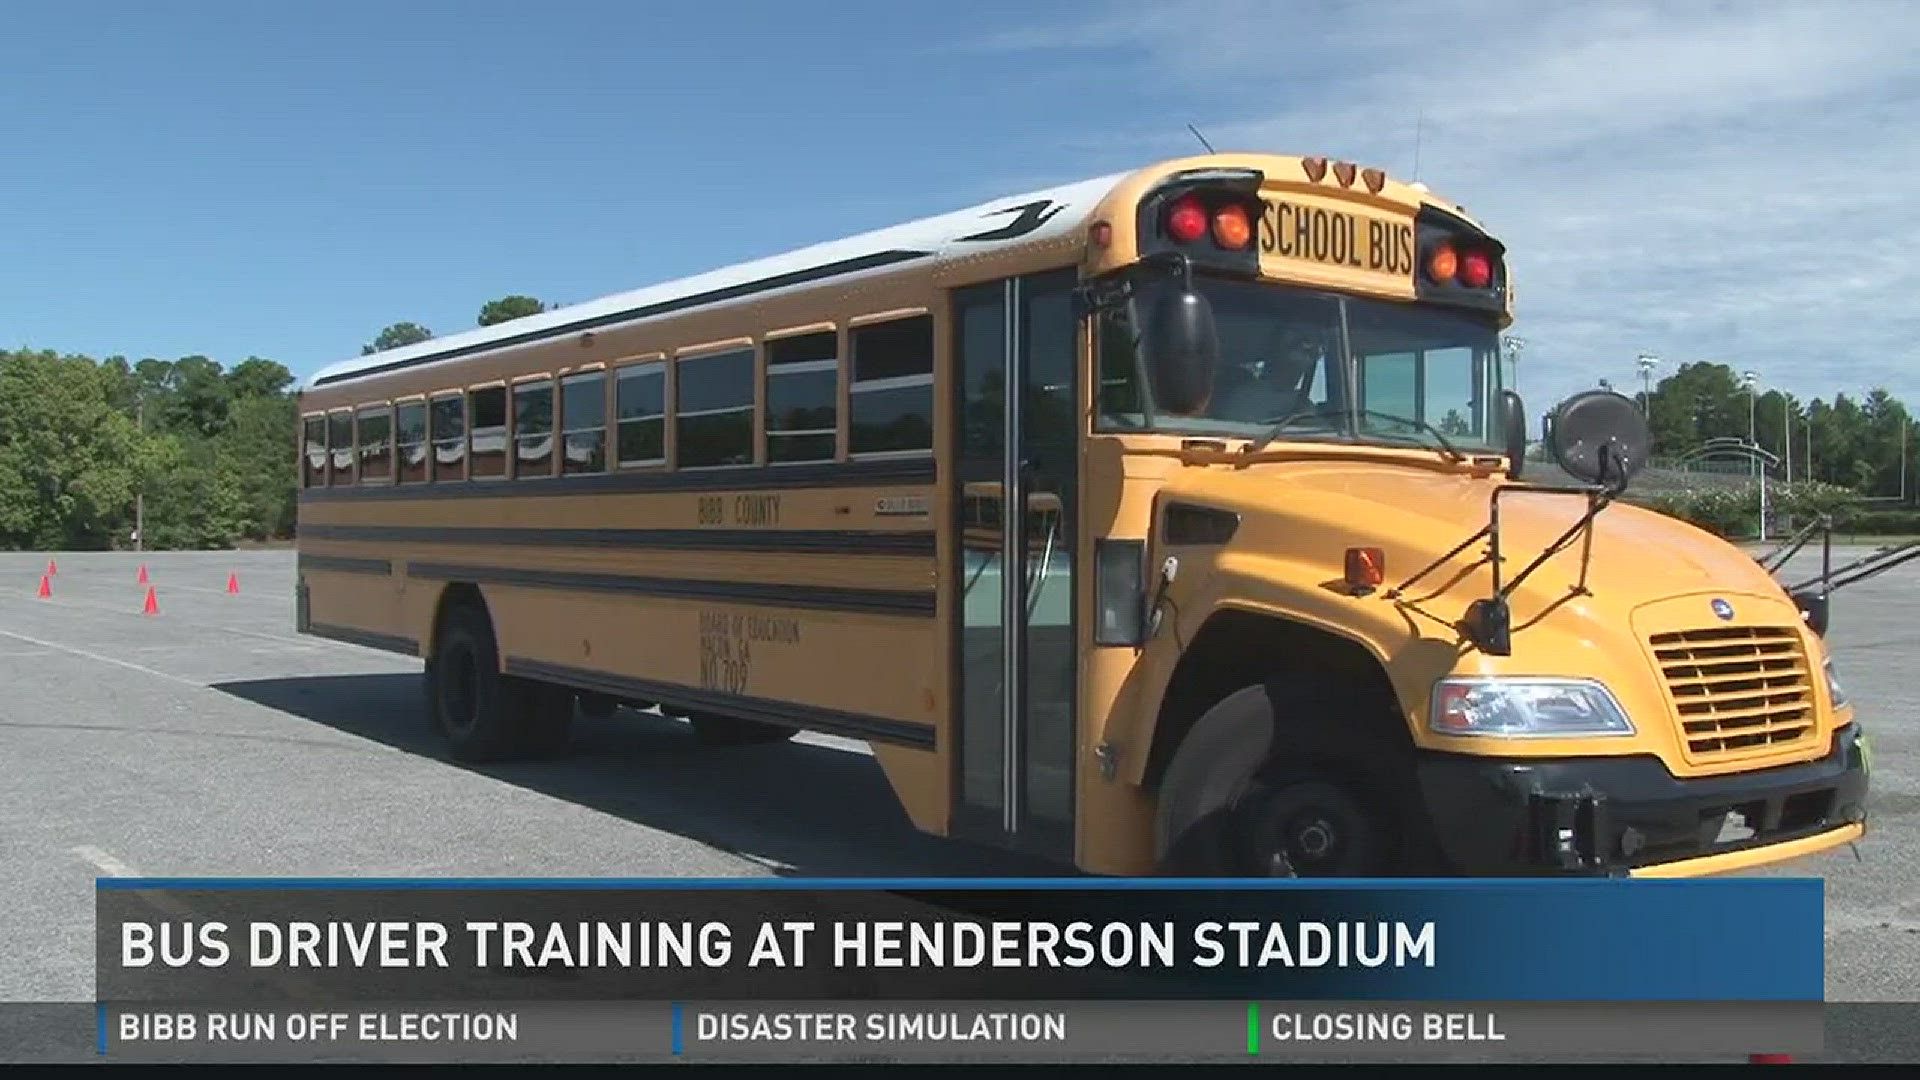 Bus driver training at Henderson Stadium